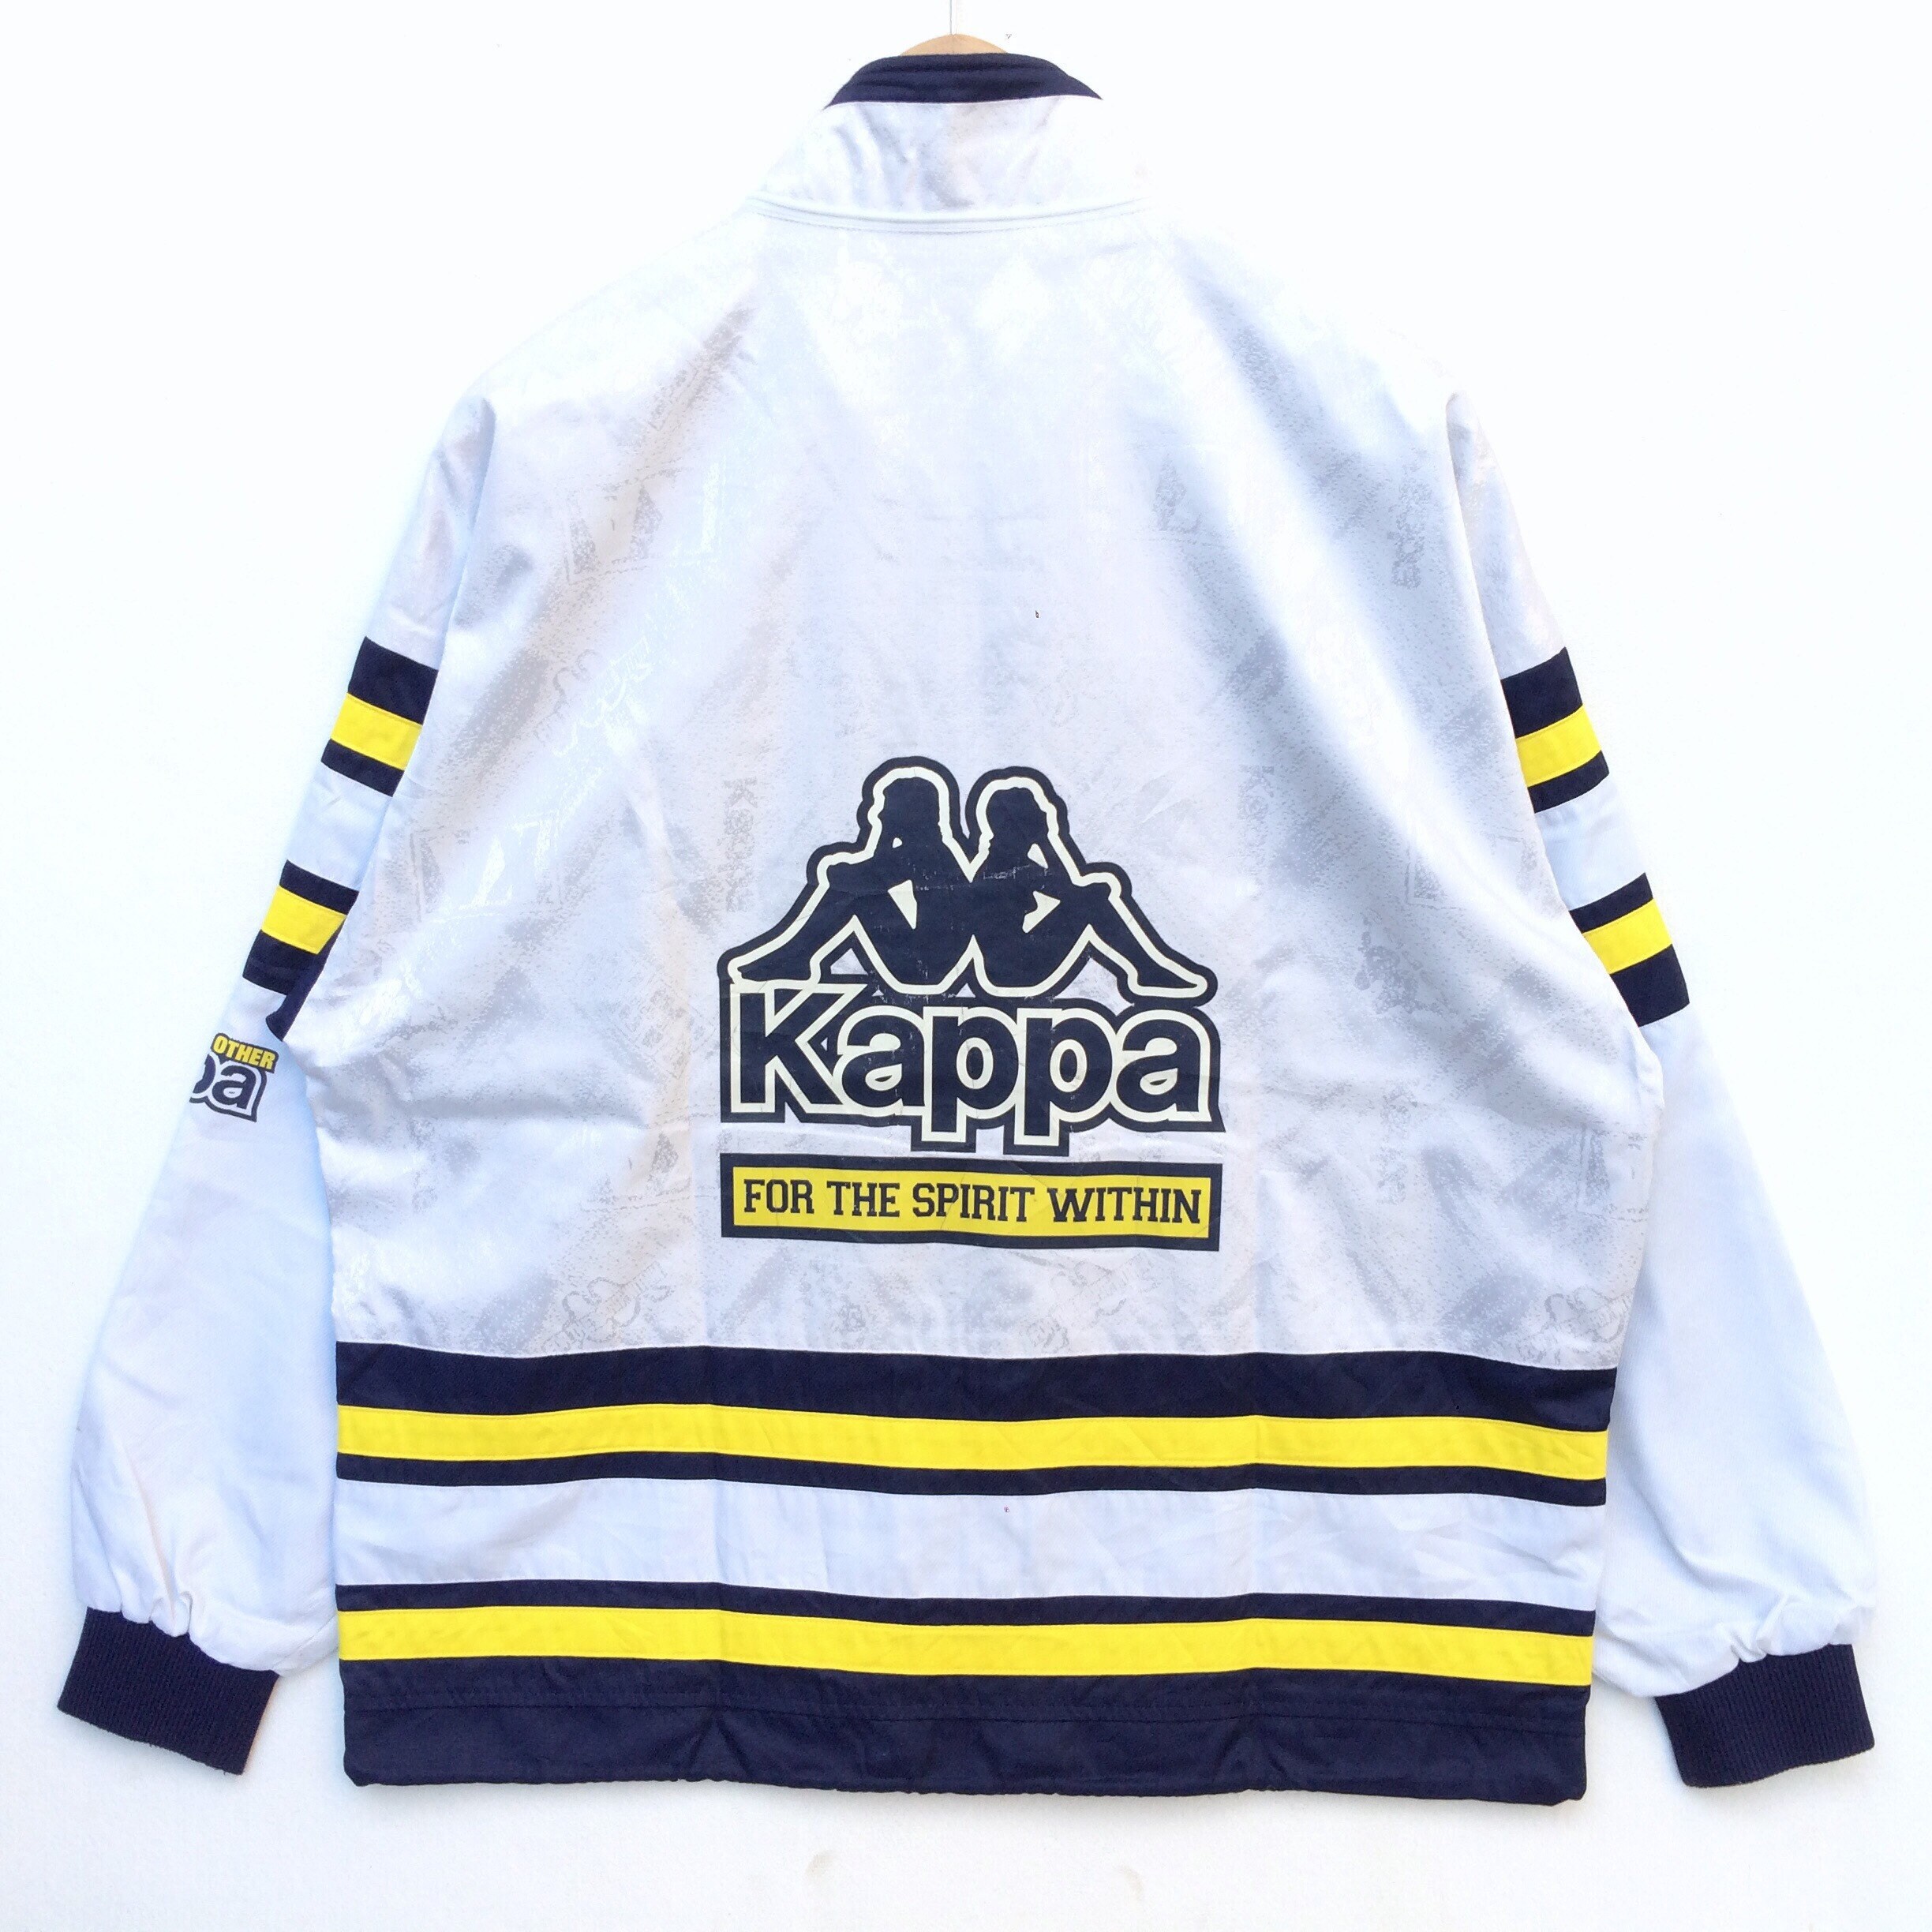 Vintage Kappa Sweatshirt Kappa Italia Kappa Clothing Kappa Pullover Kappa Sportwear Streetwear Hip Hop